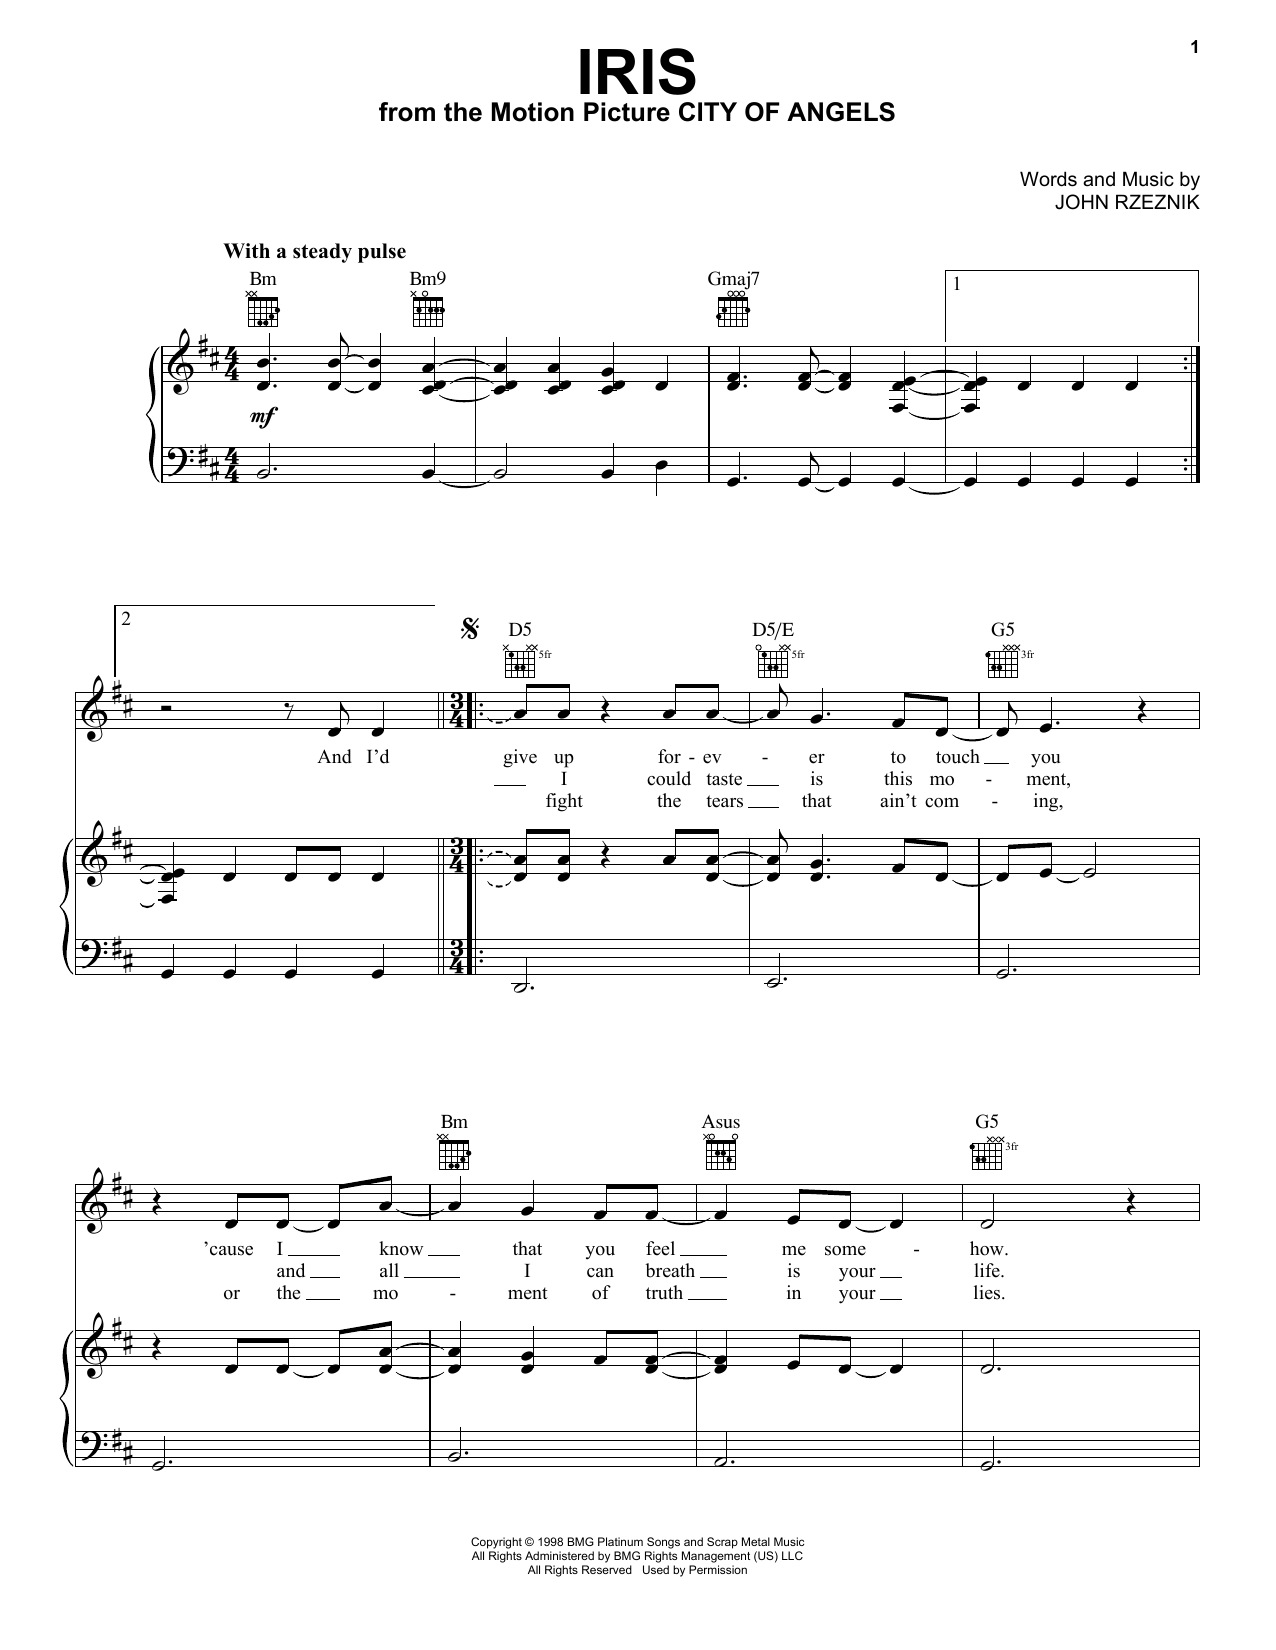 Goo Goo Dolls Iris Sheet Music Notes & Chords for Guitar Tab - Download or Print PDF